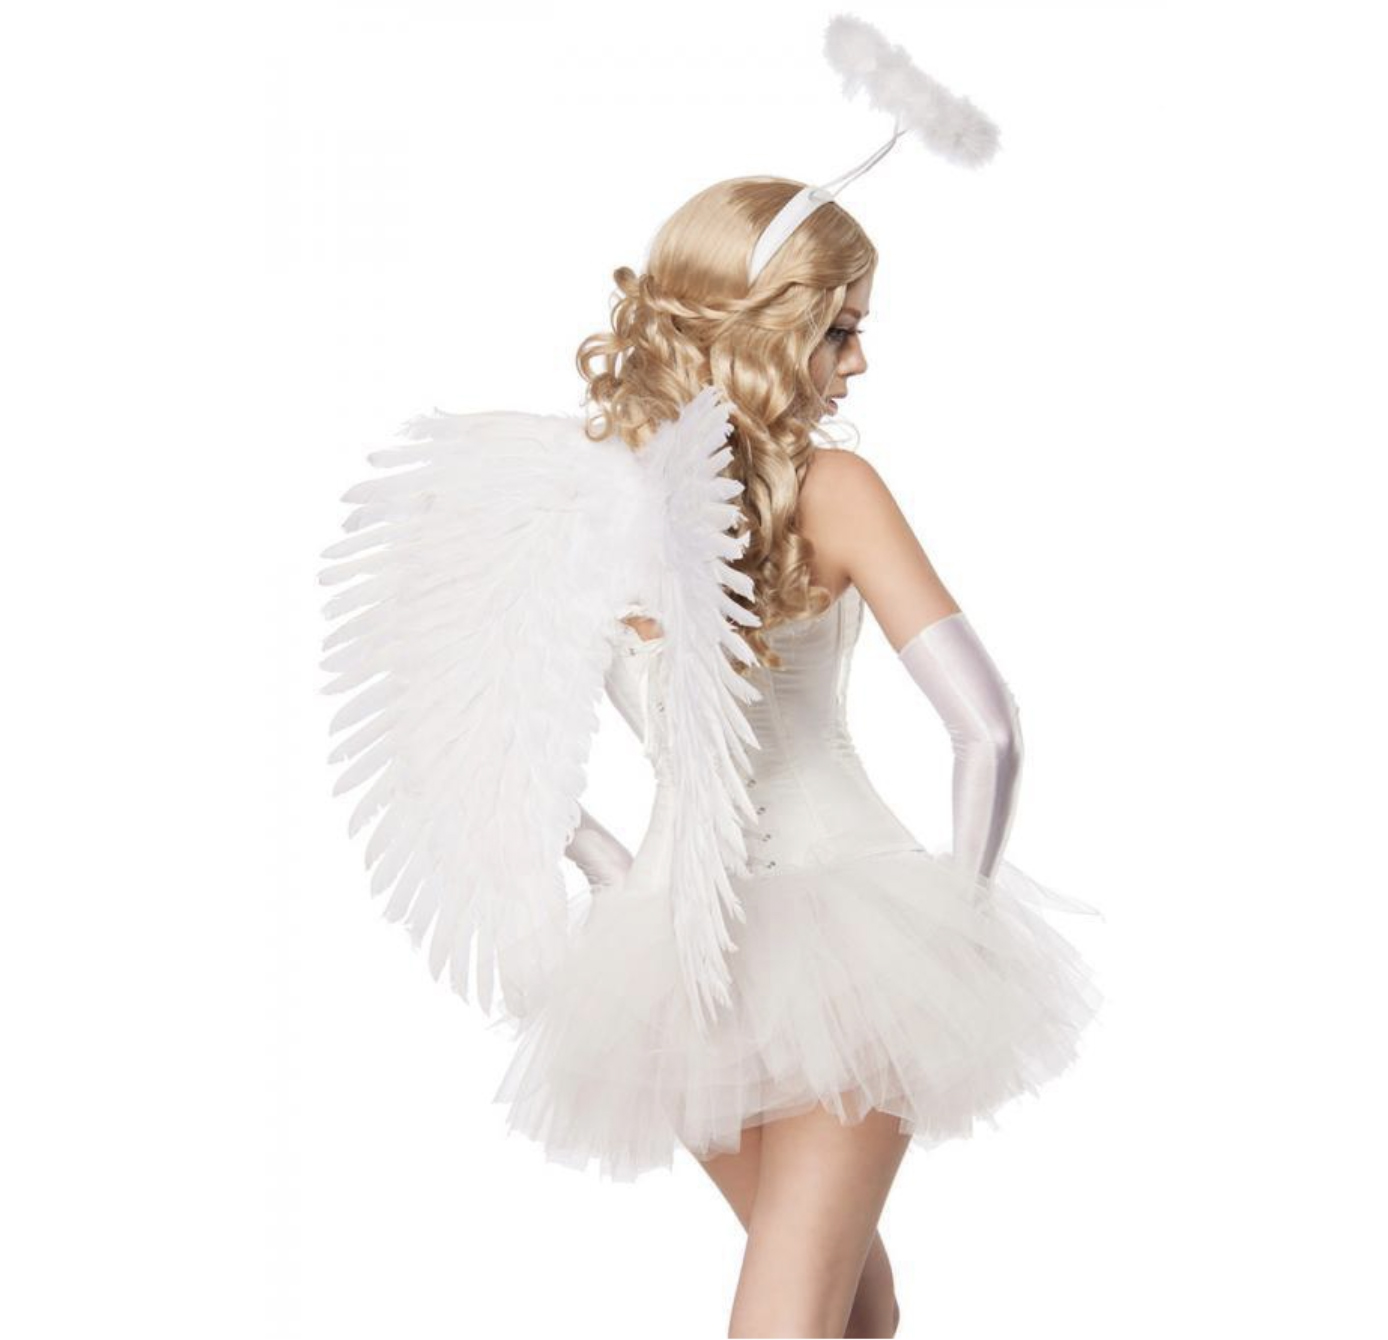 Sweet angel costume